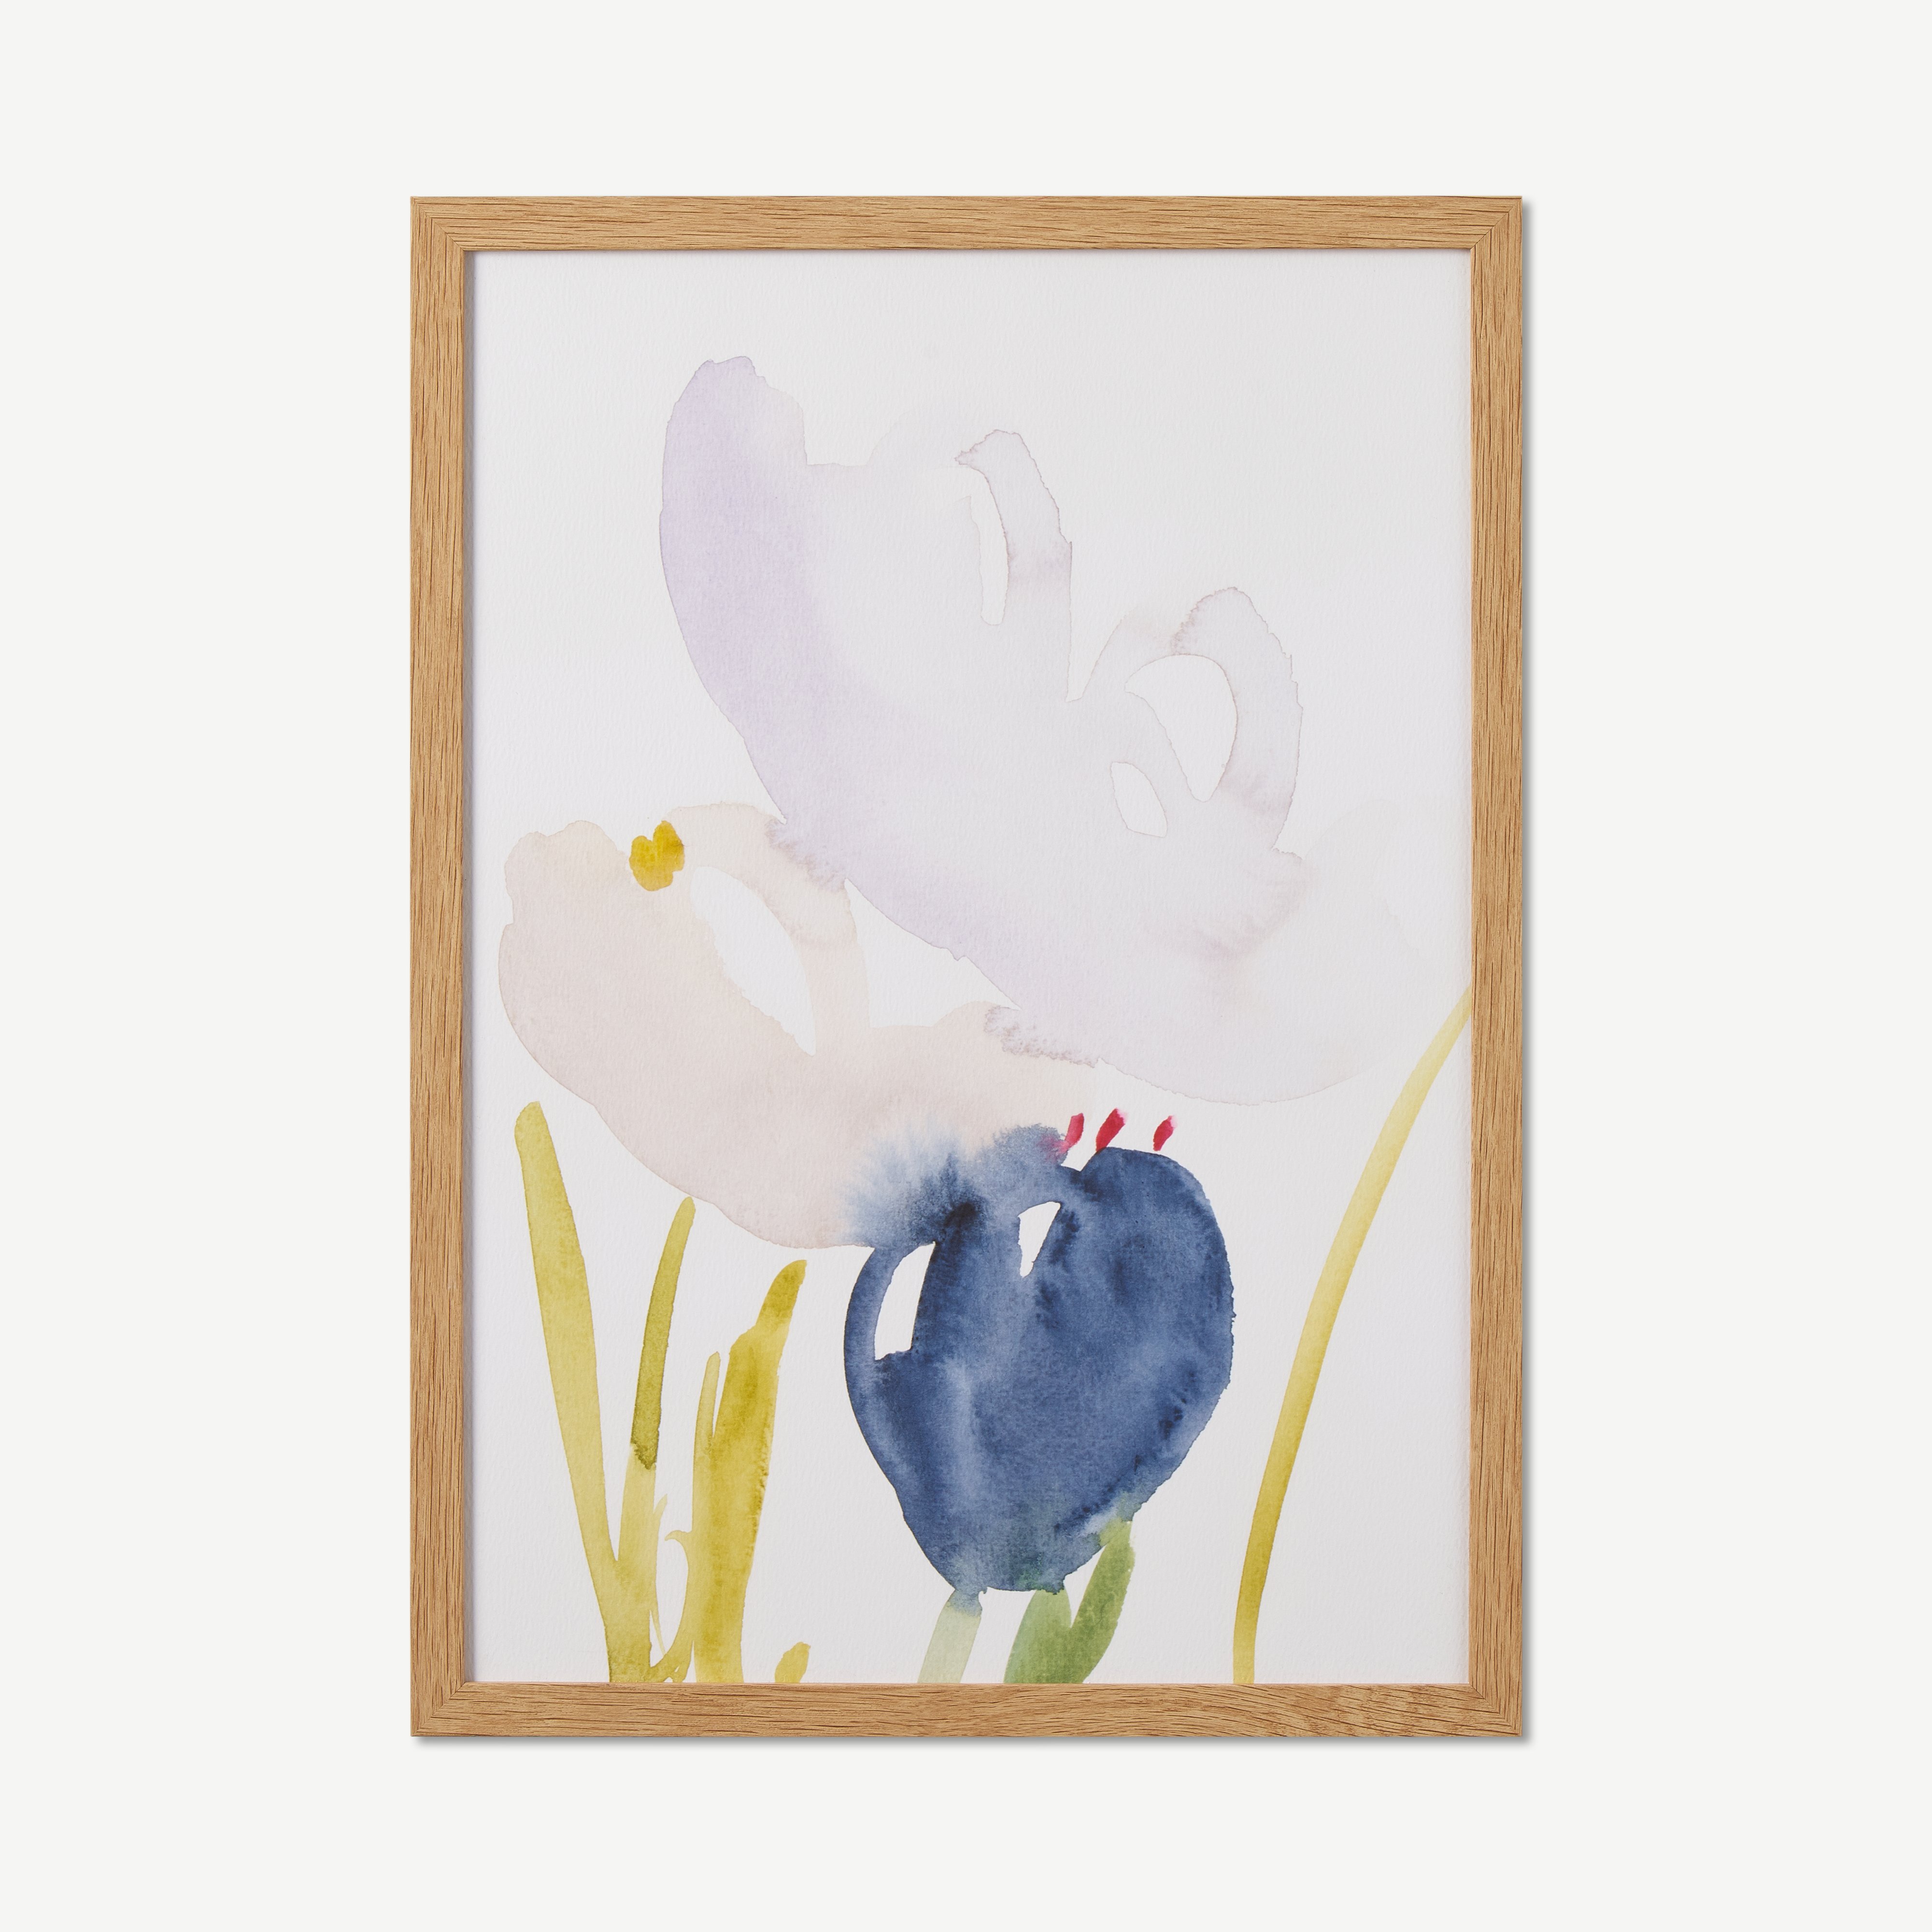 Lisa Hardy, 'Floral IV' Limited Edition Framed Print, A2